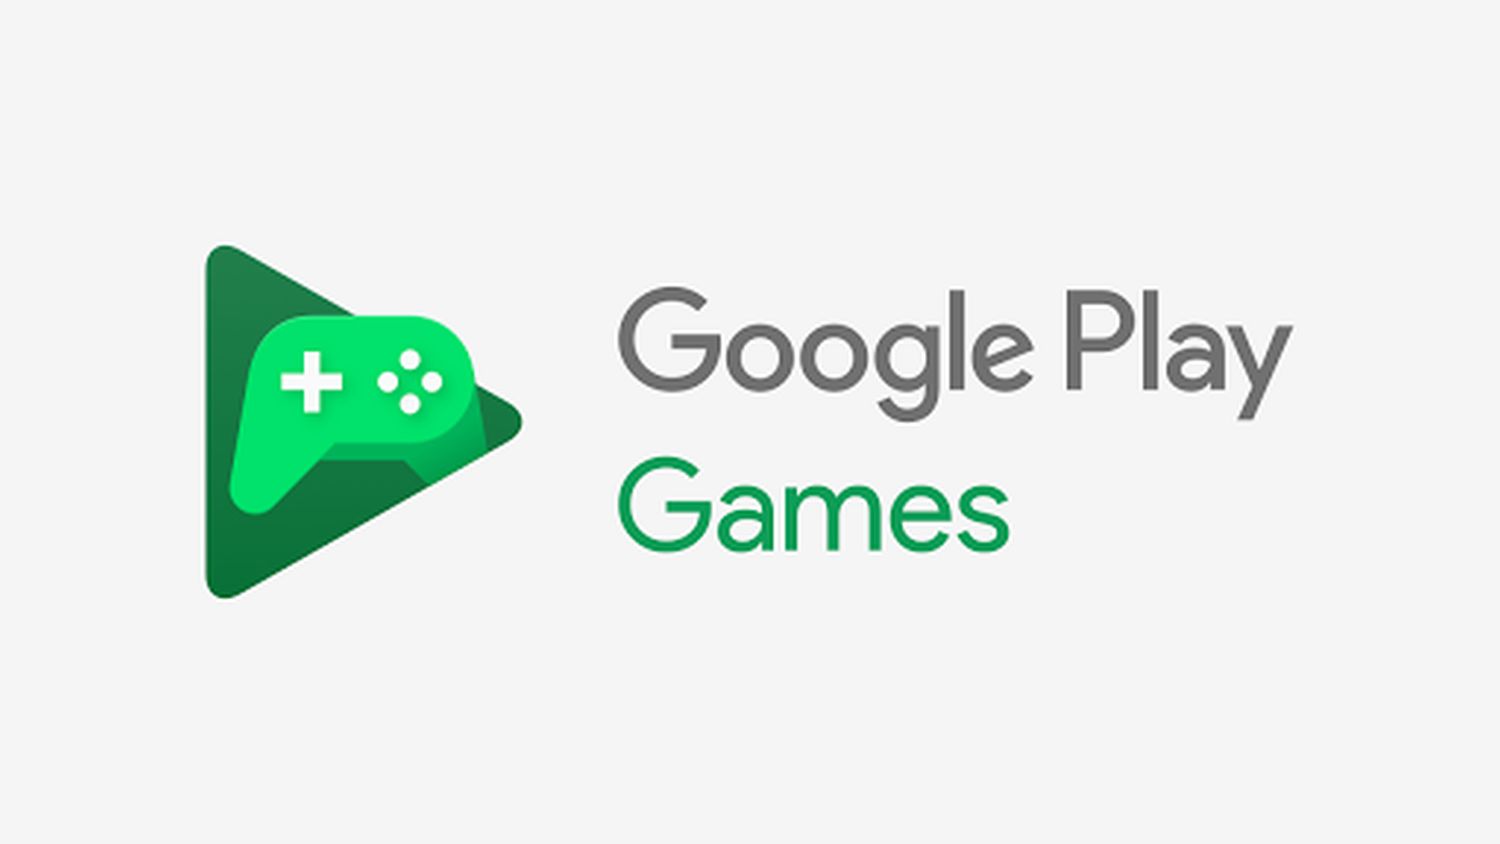 google play games logo